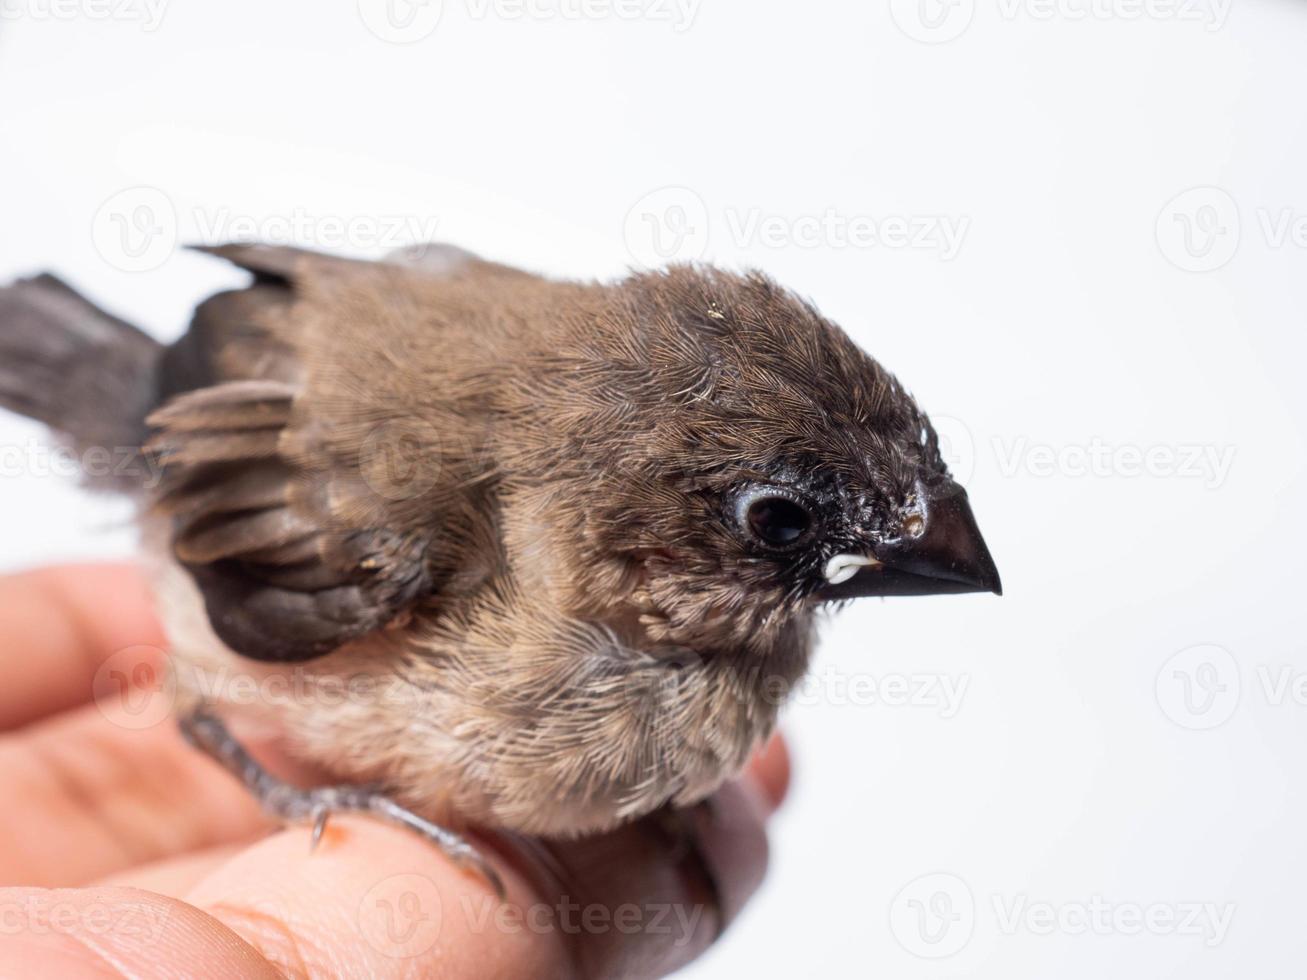 Picture of baby Javan Munia bird photo